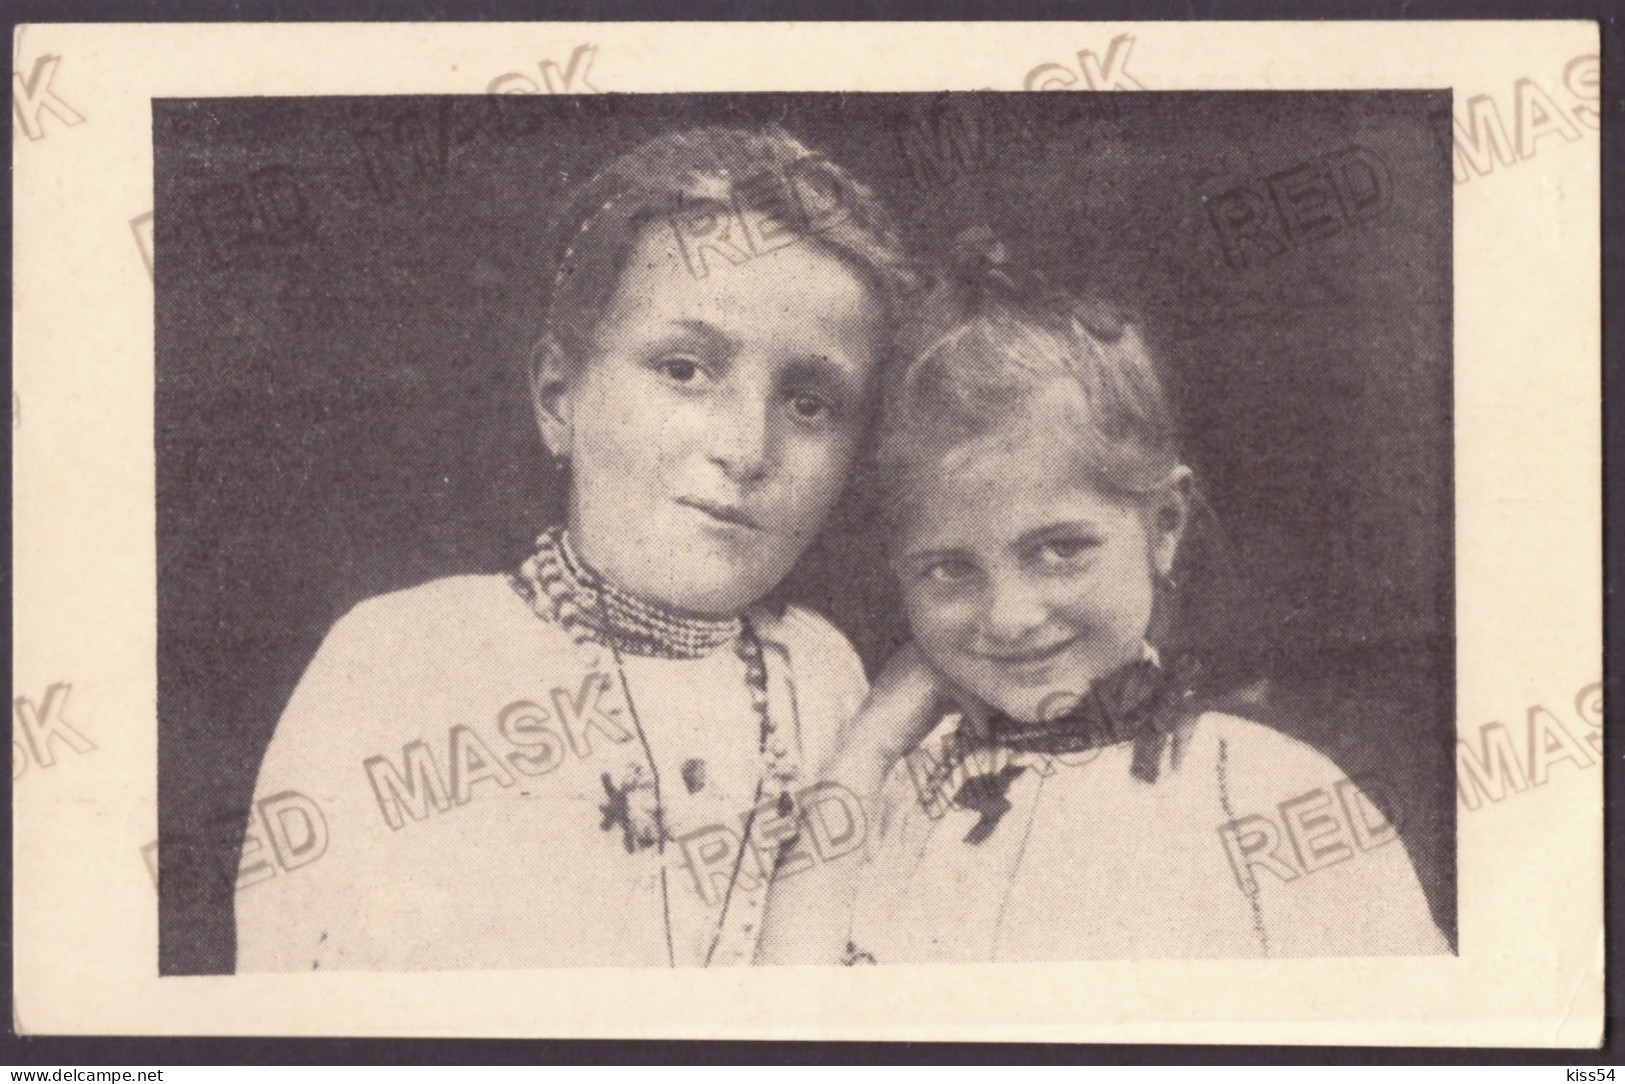 RO 69 - 22946 PALOS, Mures, Ethnic Women, Romania - Old Postcard - Unused - Romania